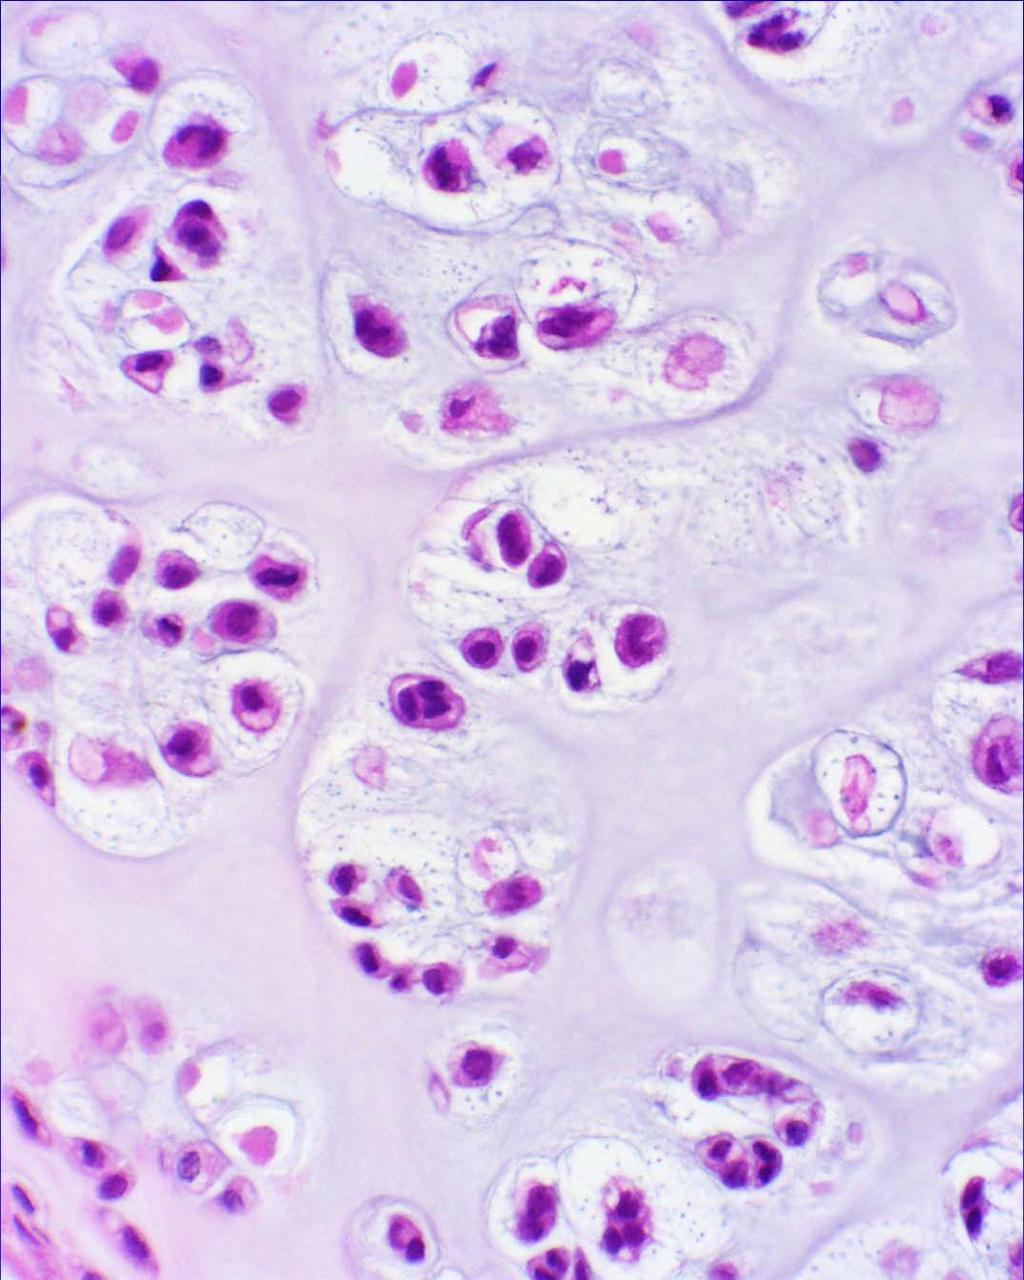 Enchondroma Peripheral concentration of chondrocytes Minimal cytologic atypia